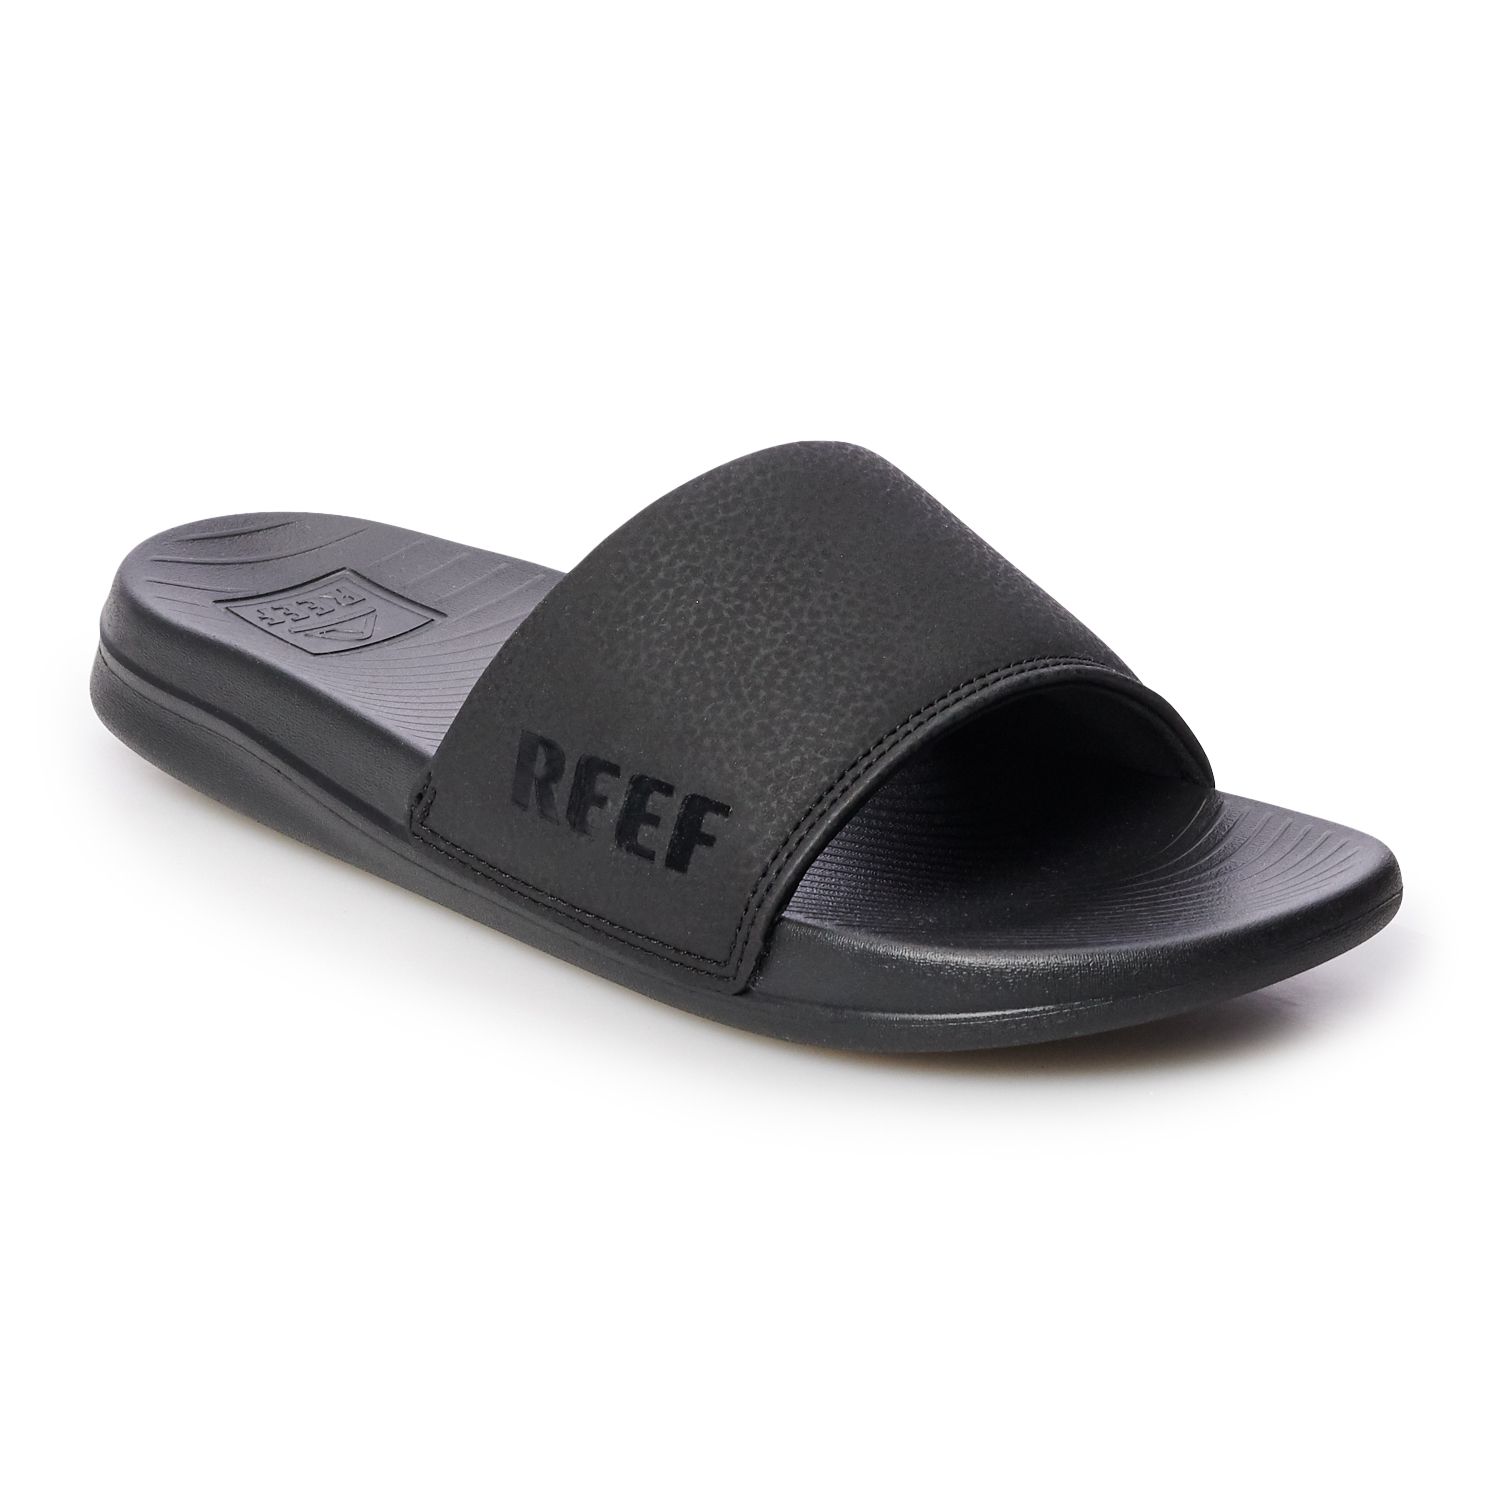 reef sandals kohls